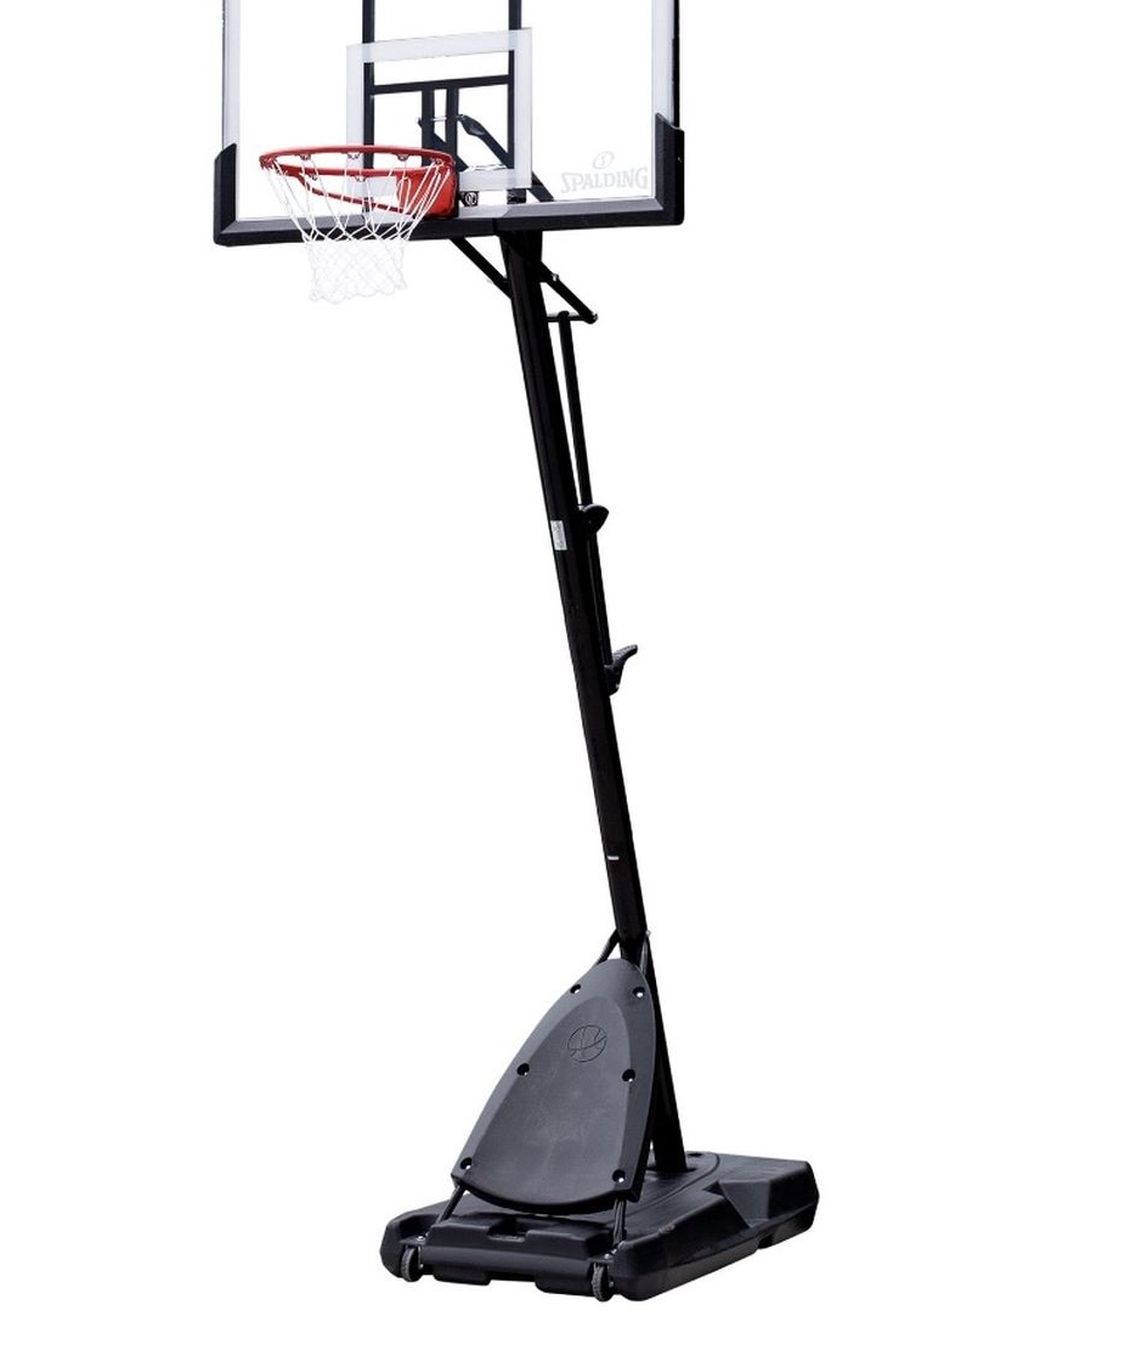 Spalding 54" Polycarbonate Portable Basketball Hoop